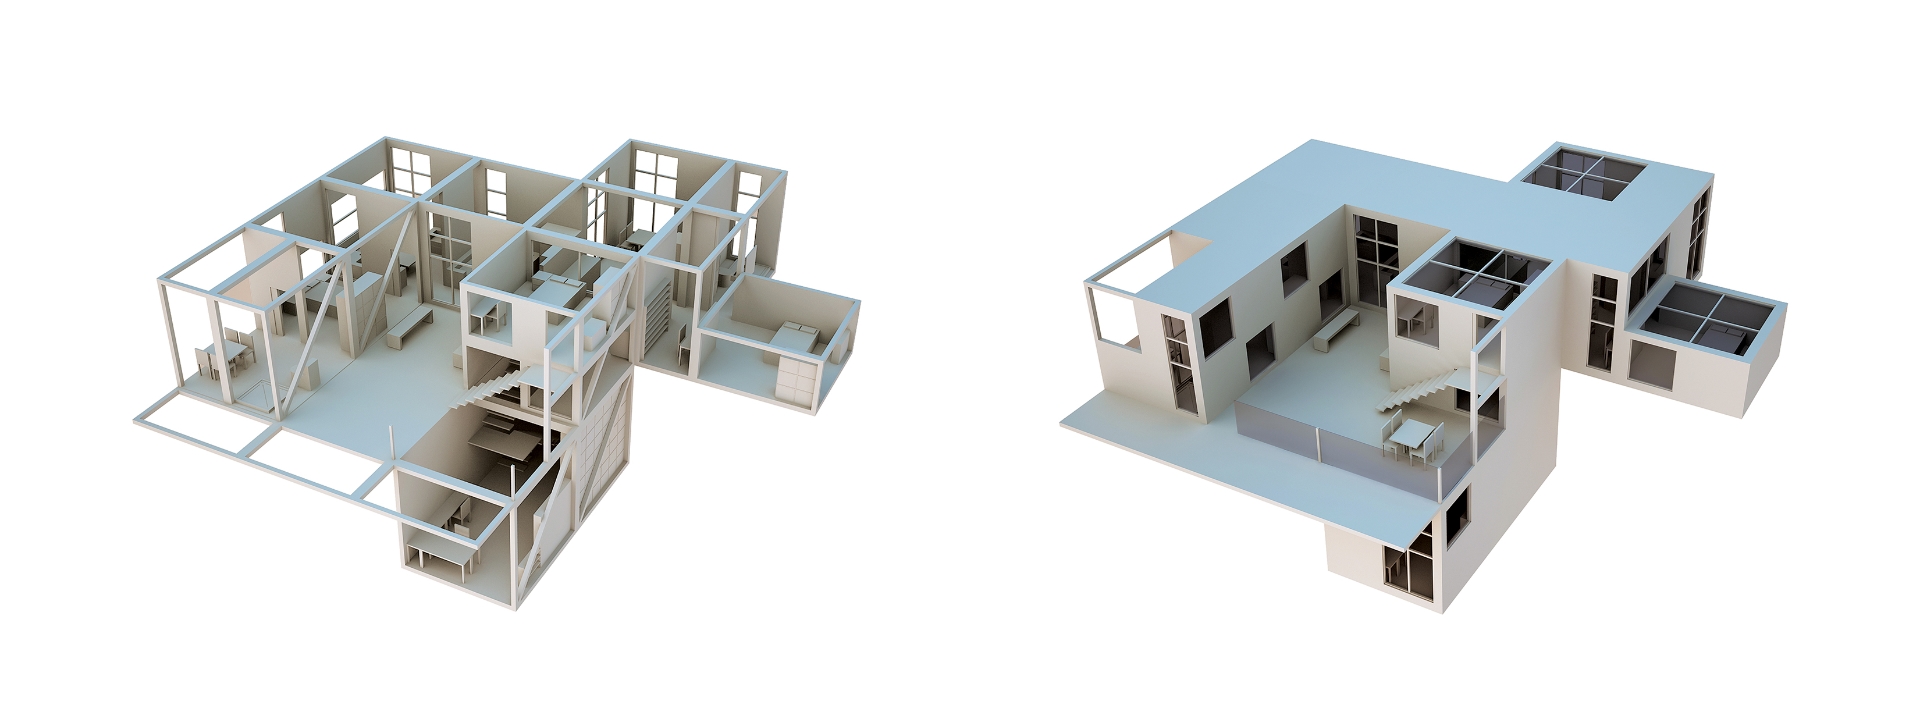 Modular Public Housing 3.jpg